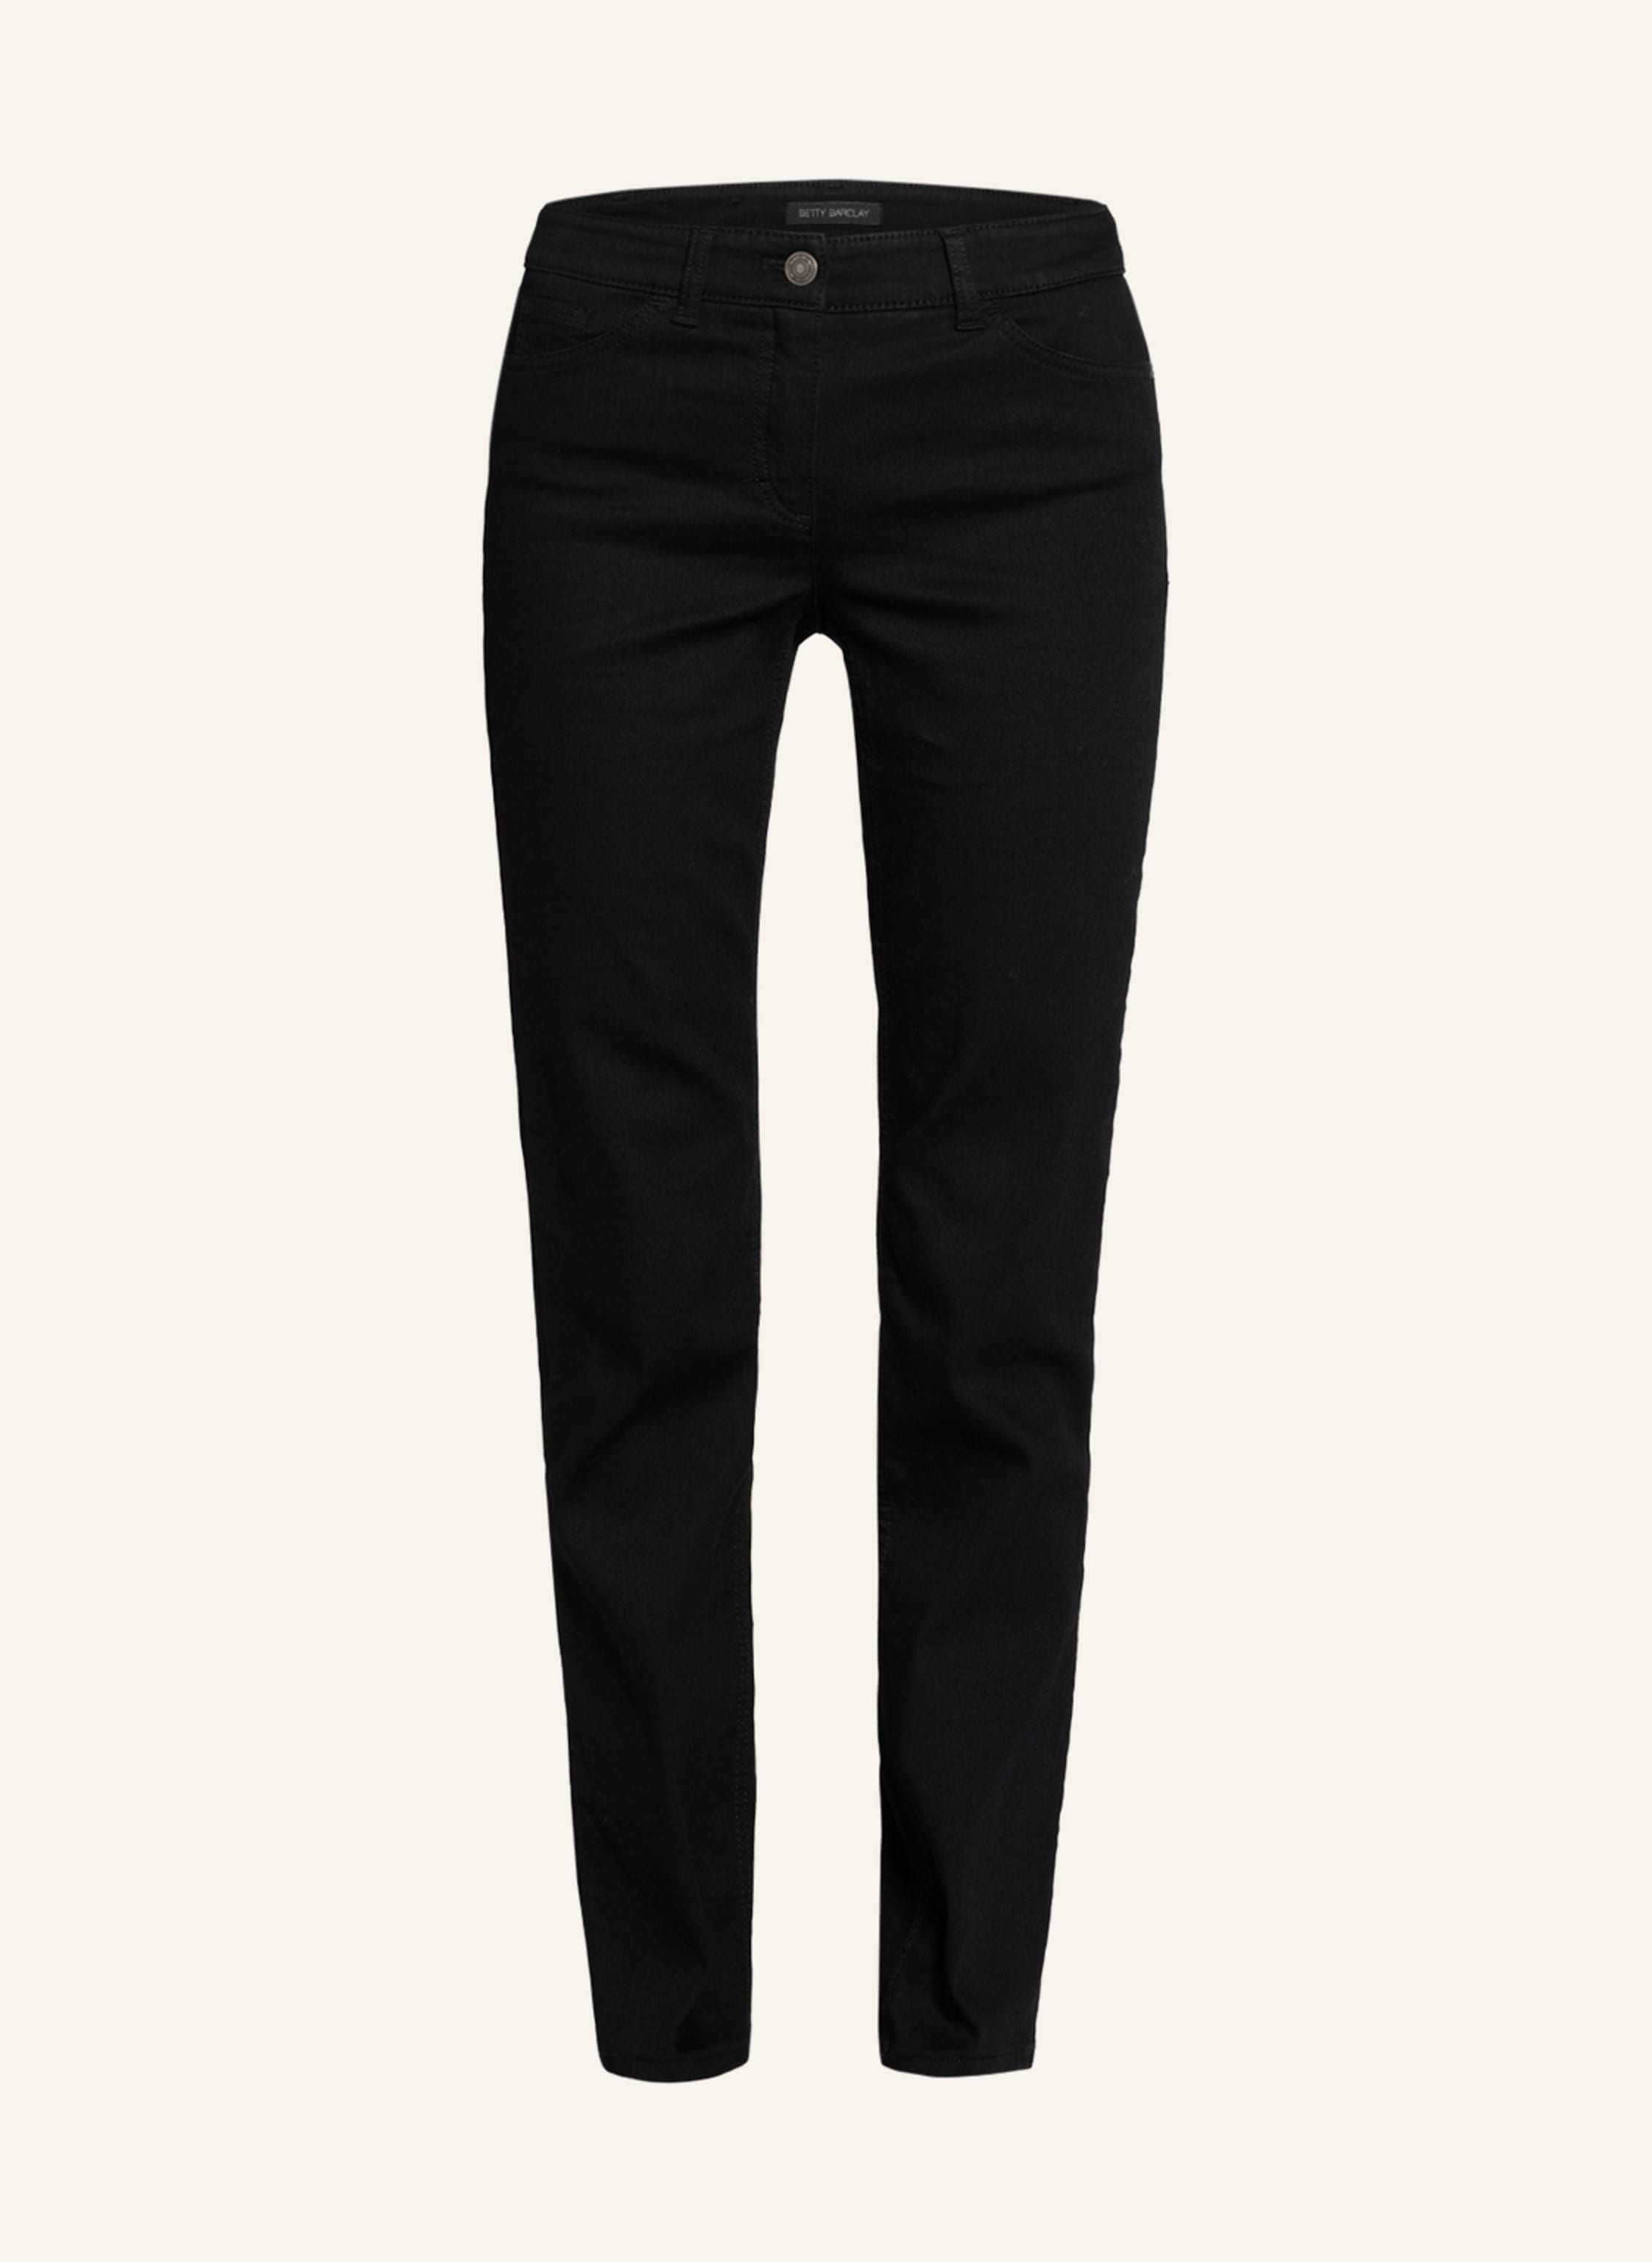 Betty Barclay Jeans in 9620 black/black denim